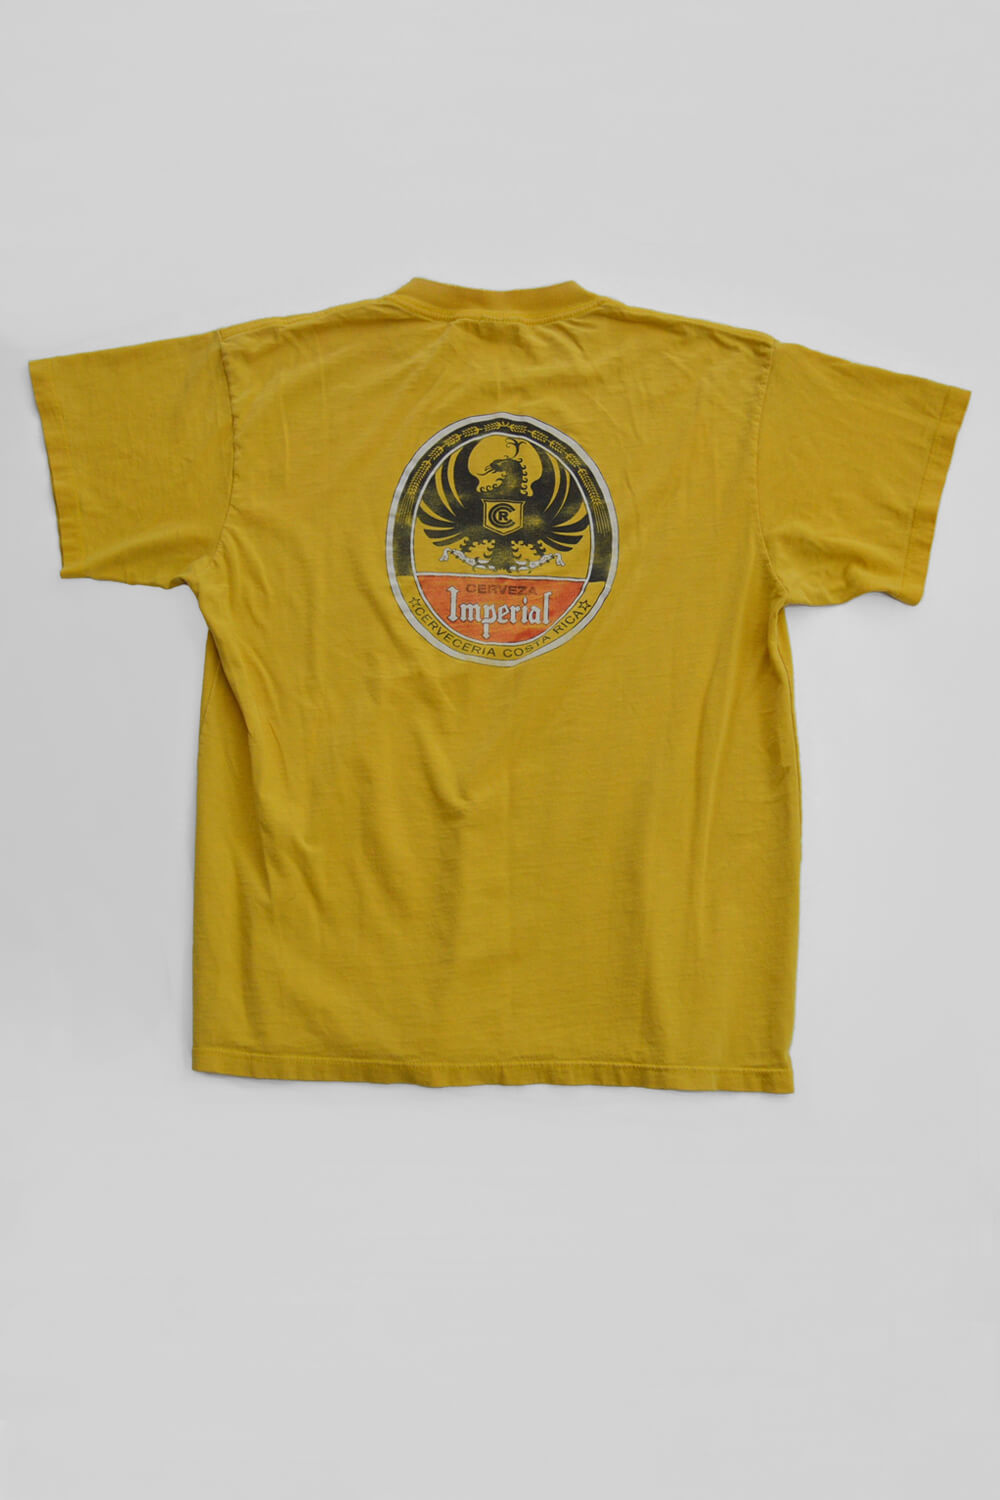 vintage worn crew neck graphic tee - sunflower yellow - men's size medium